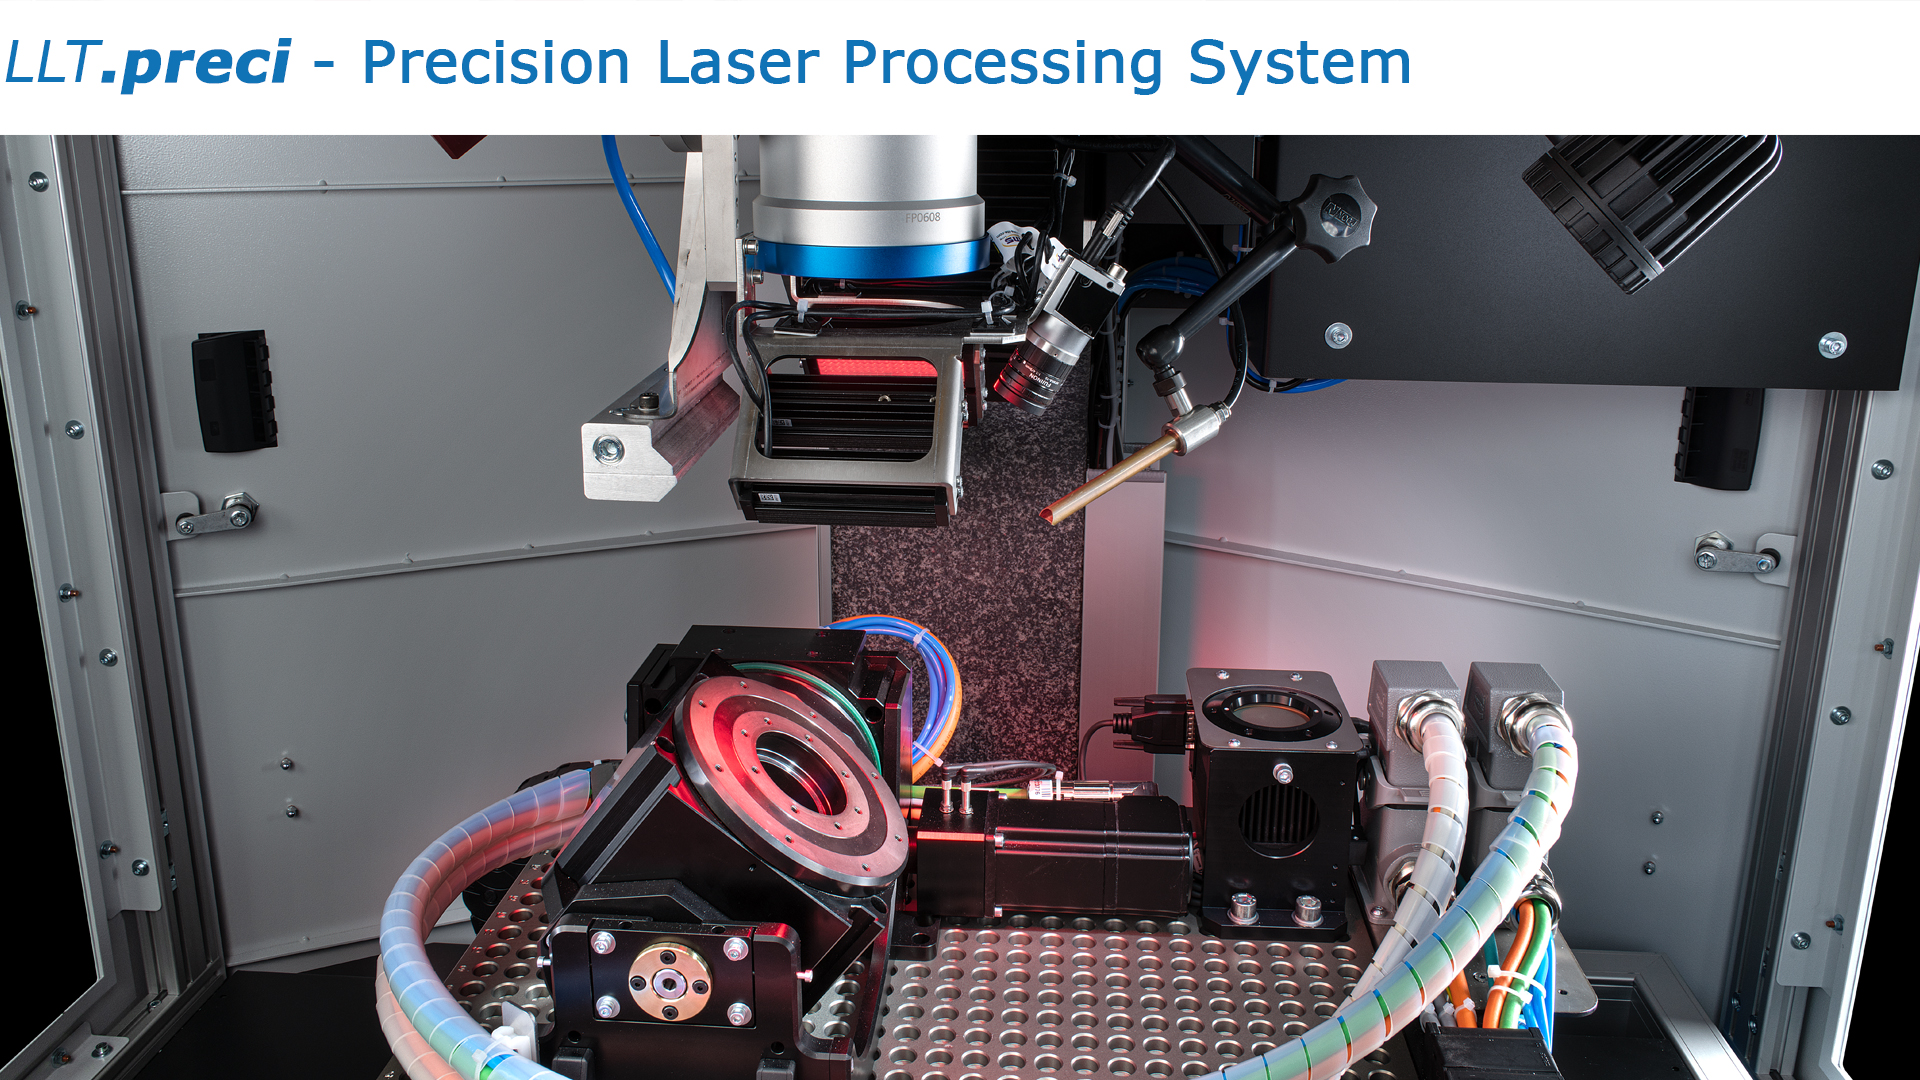 𝘓𝘓𝘛.𝙥𝙧𝙚𝙘𝙞 - Precision Laser Machining System